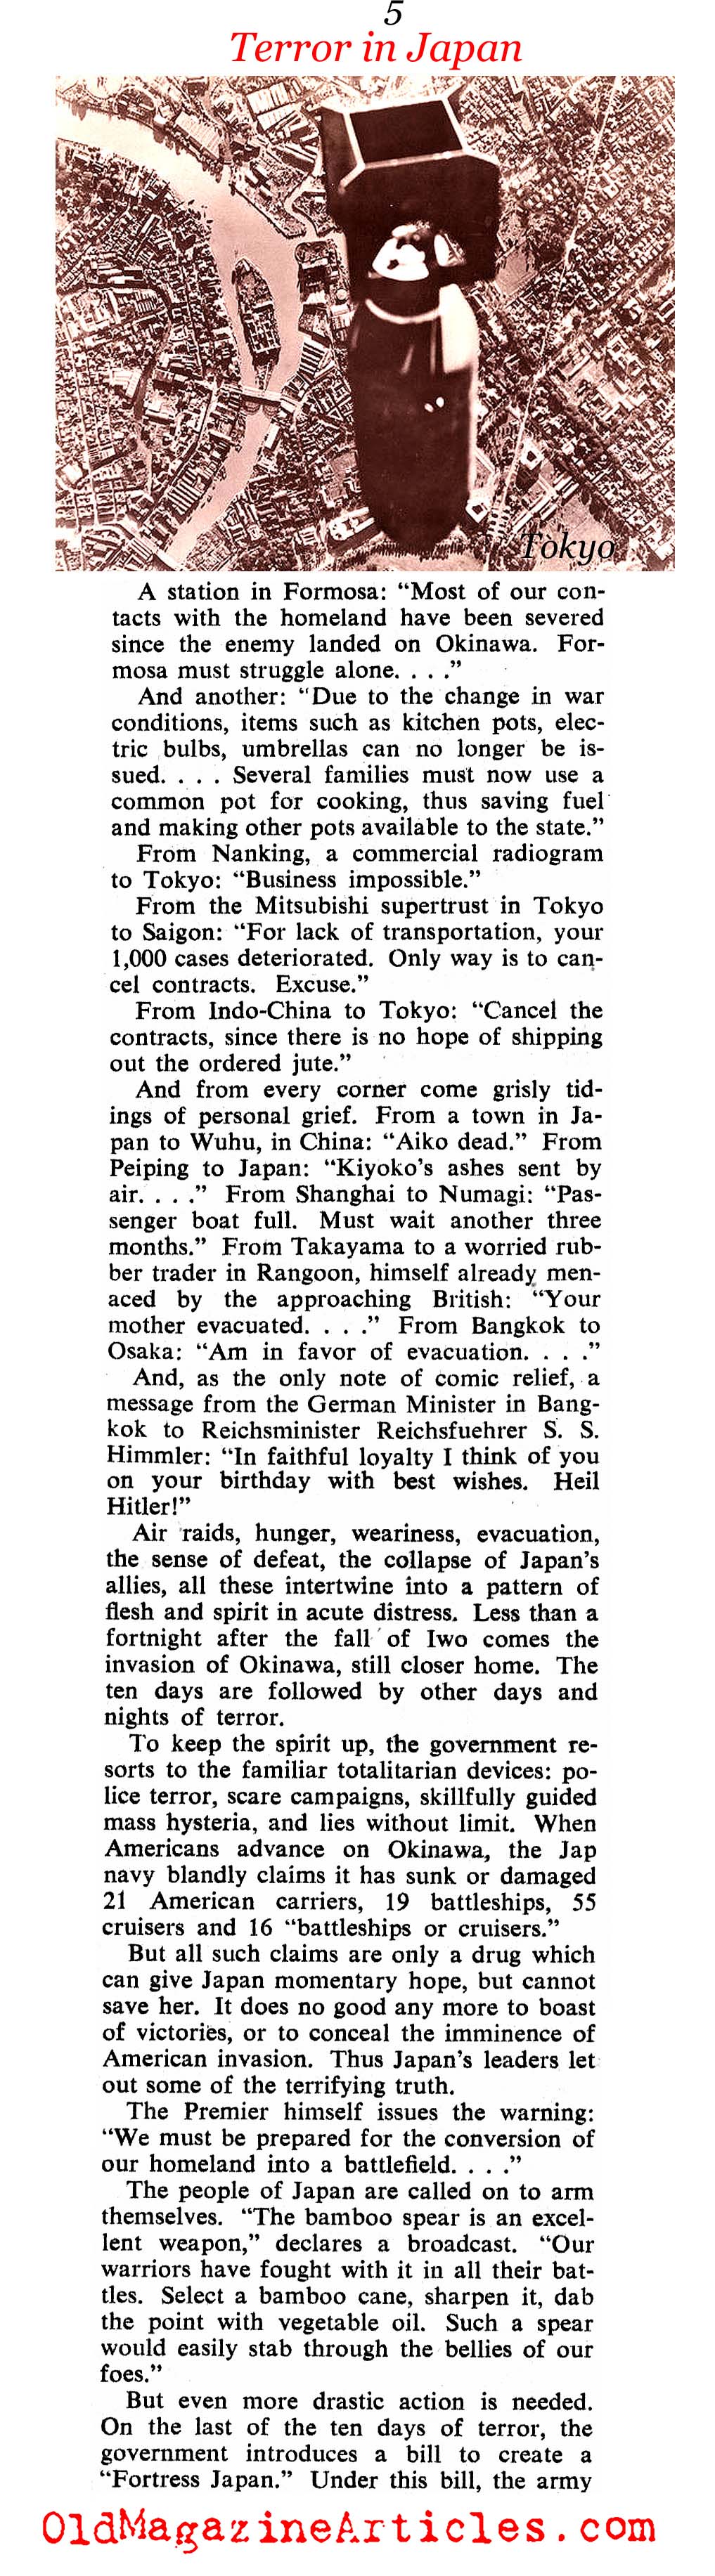 ''Terror in Japan'' (Collier's Magazine, 1945)